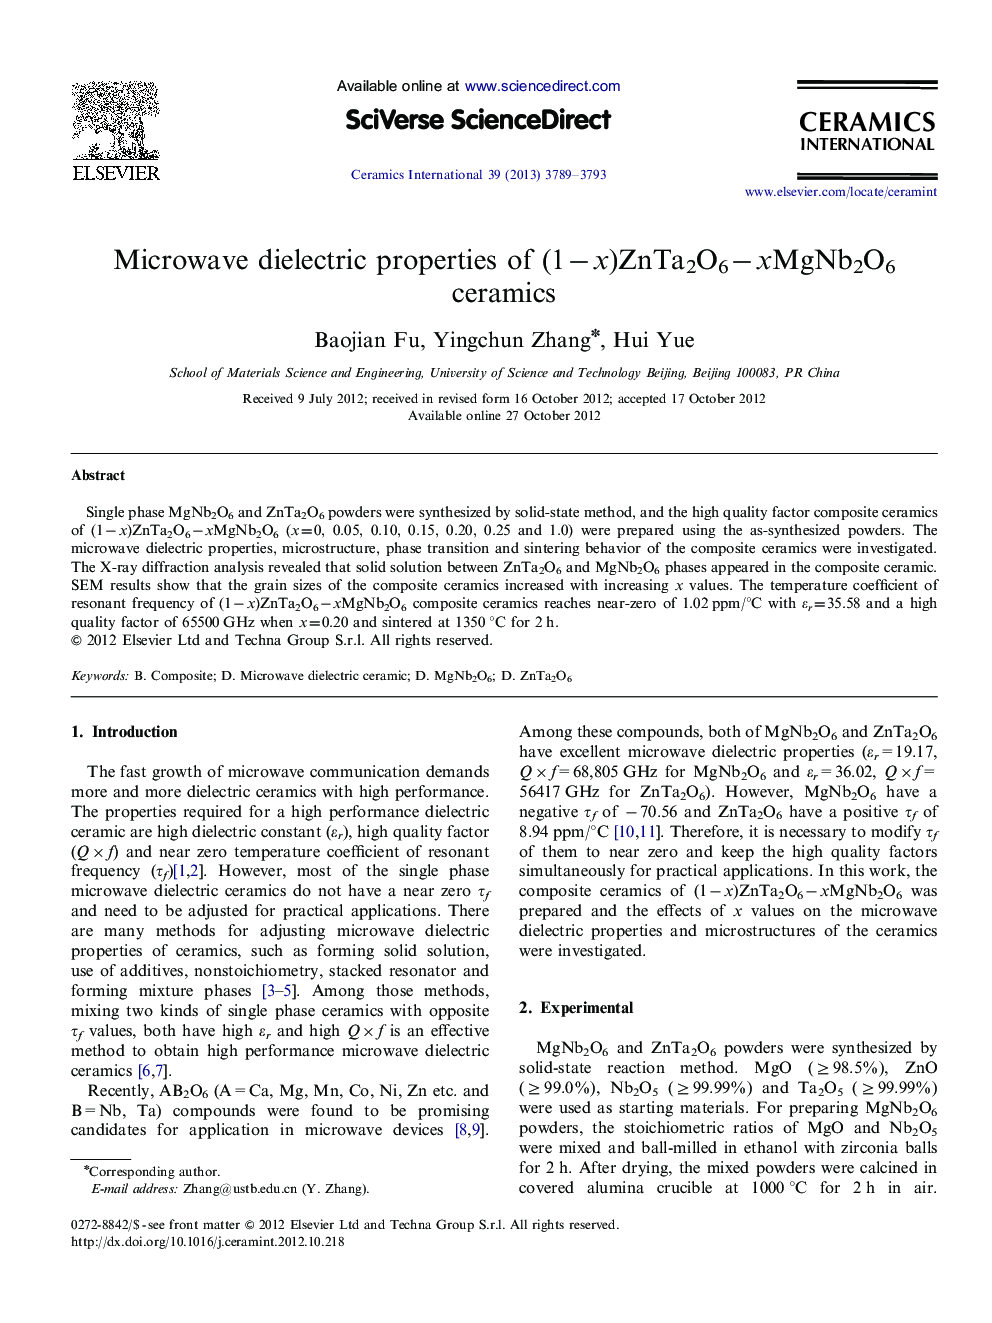 Microwave dielectric properties of (1−x)ZnTa2O6−xMgNb2O6 ceramics